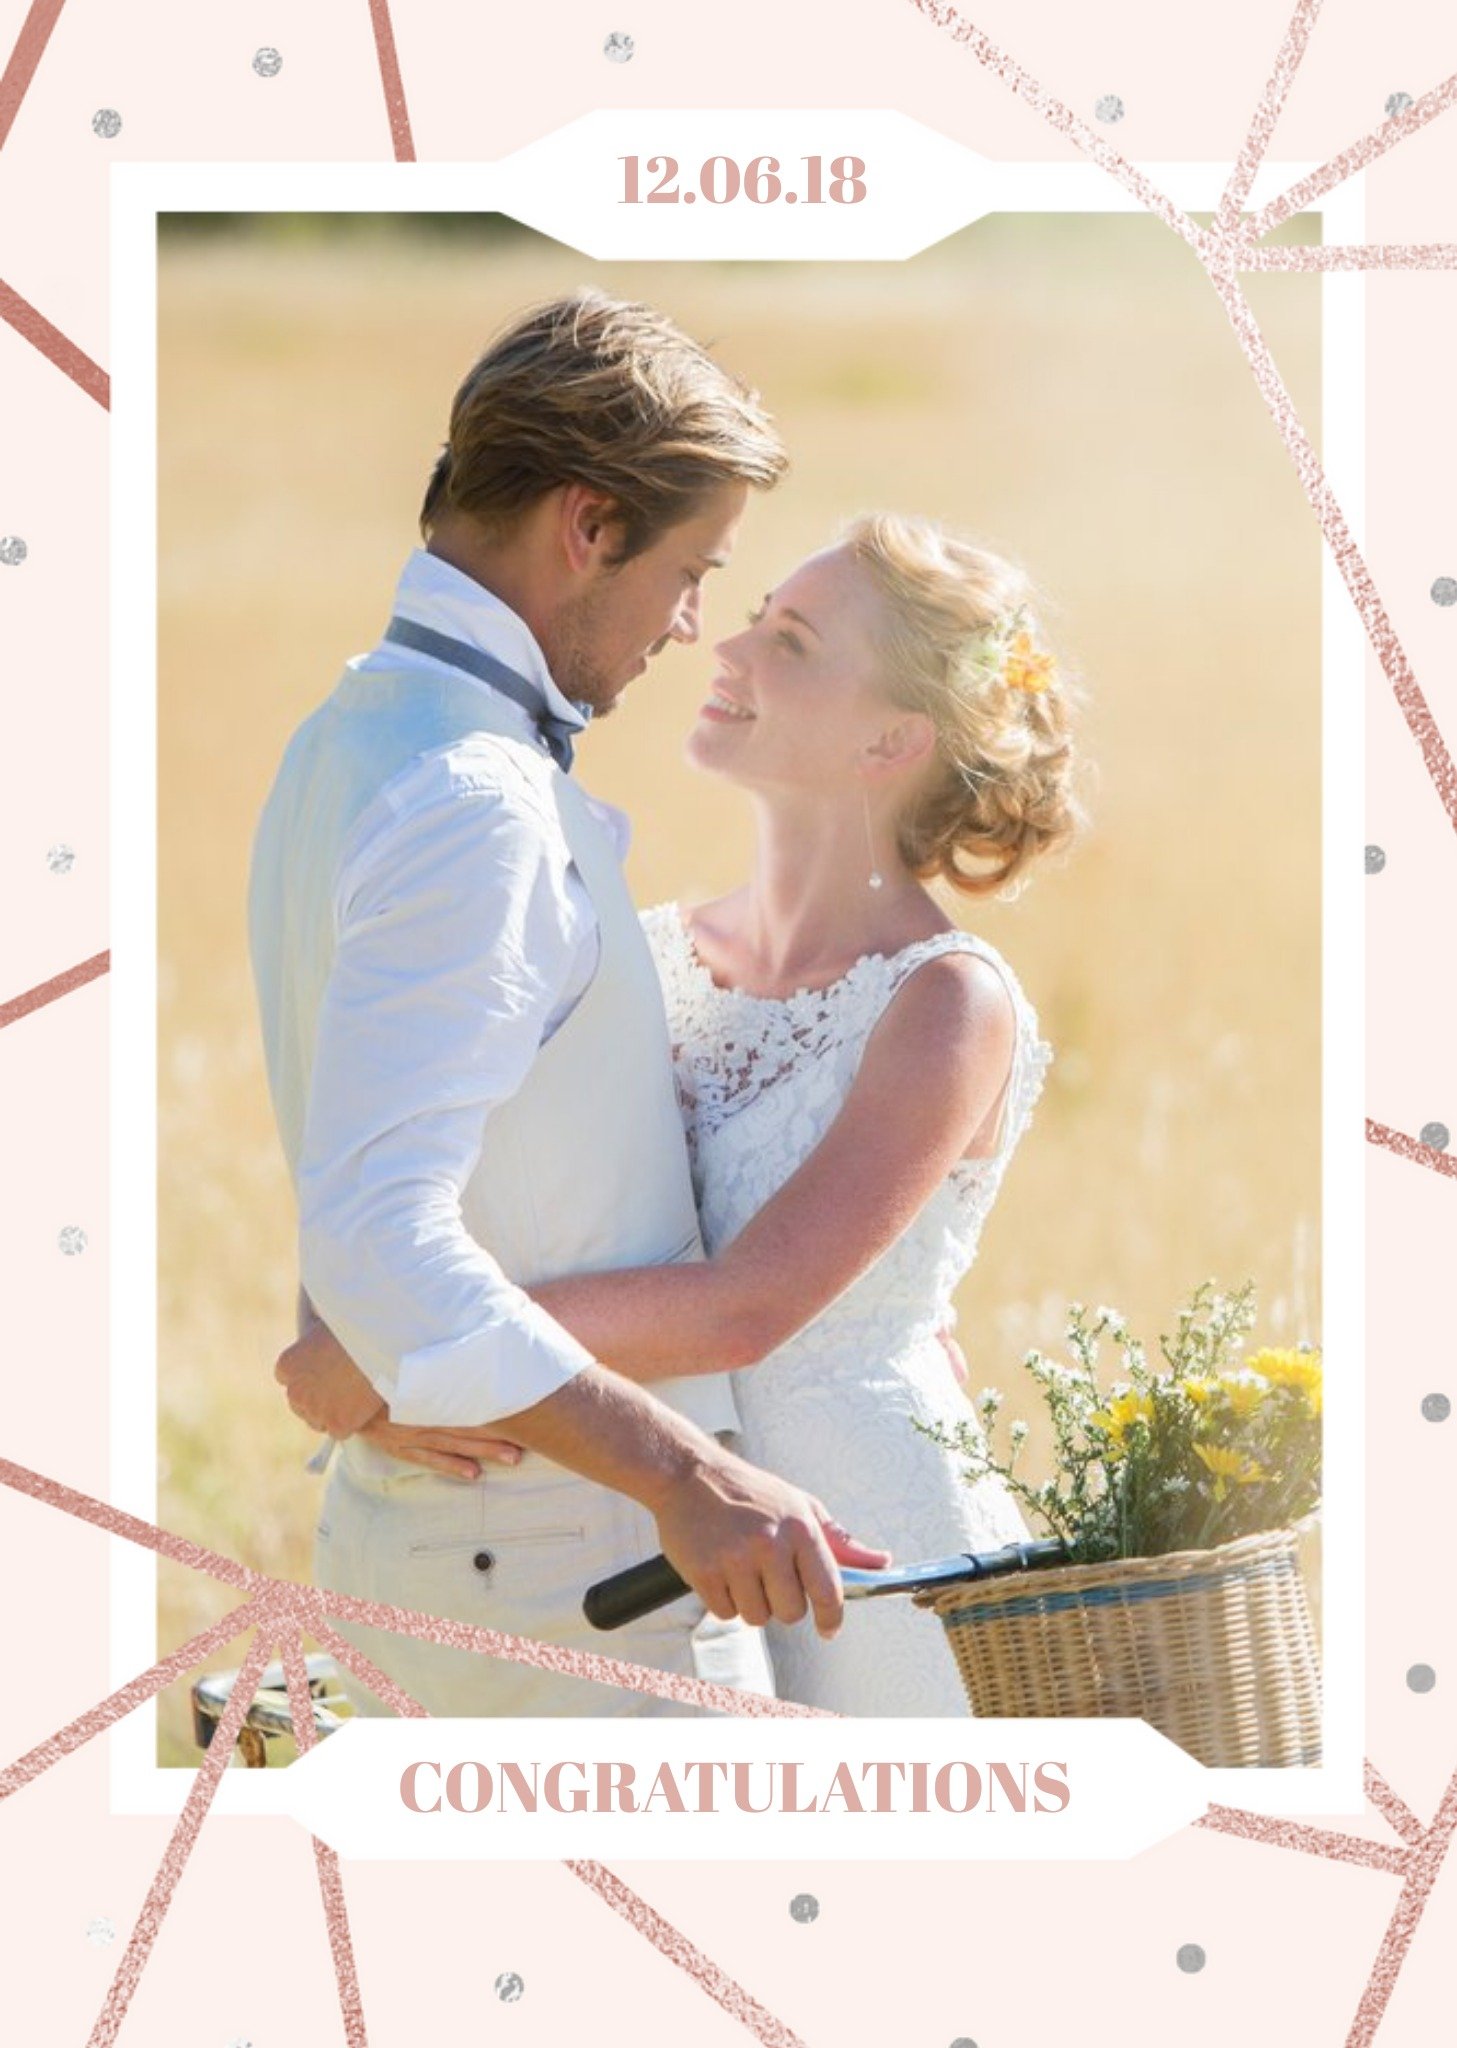 Moonpig Wedding Card - Wedding Day - Congratulations - Photo Upload Ecard